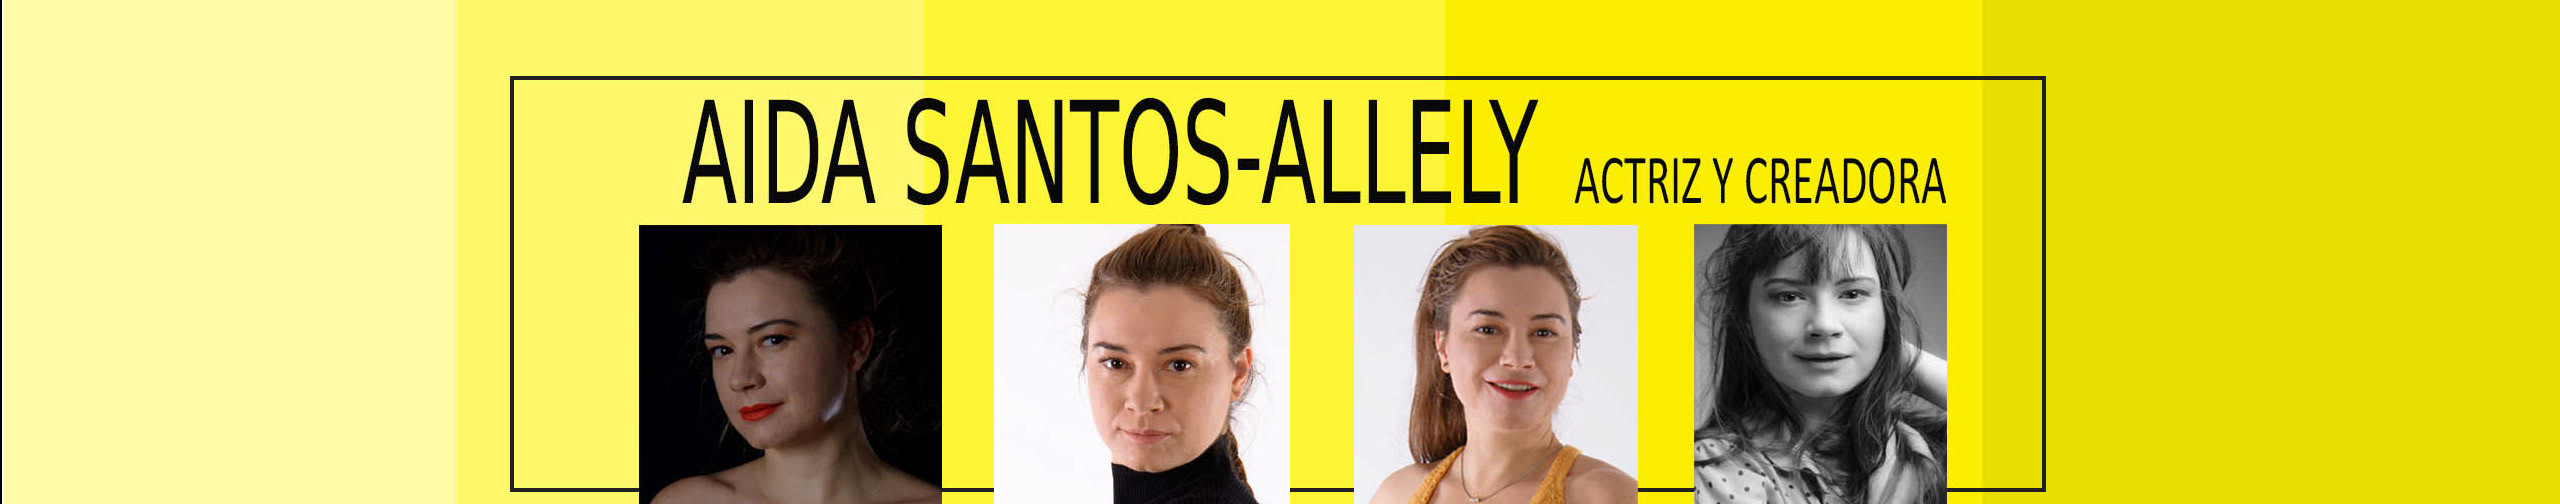 Баннер профиля Aida Santos-Allely